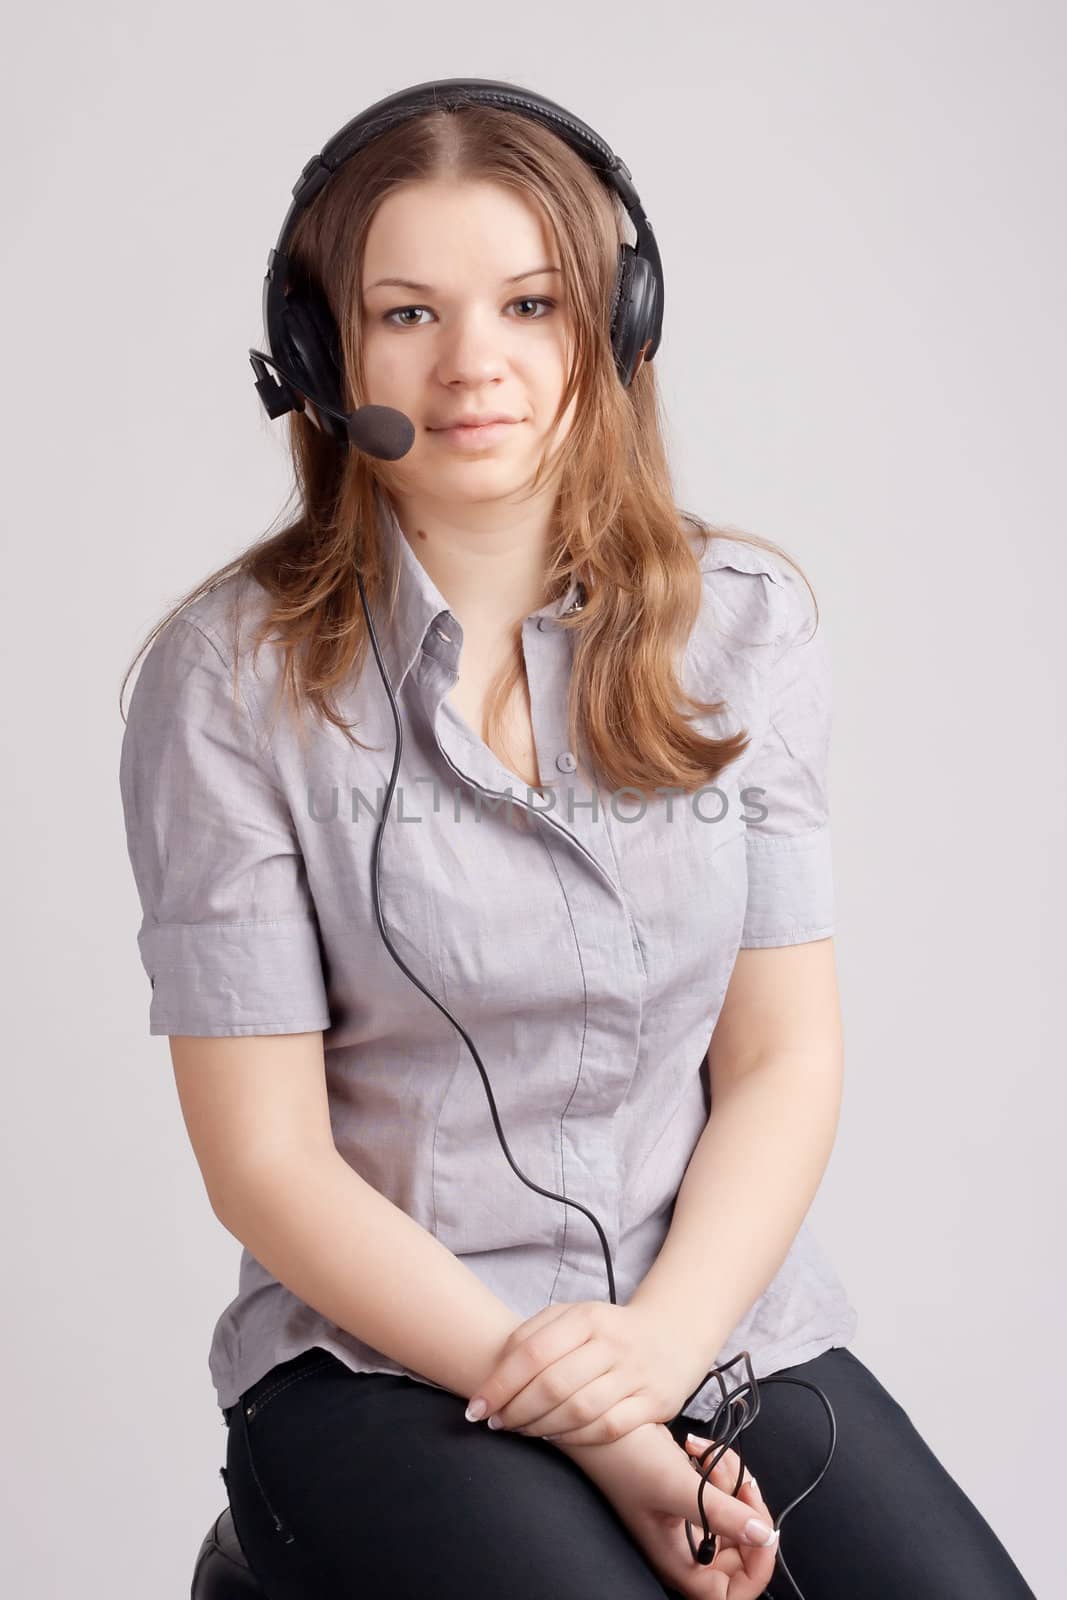 The girl in headphones  by victosha